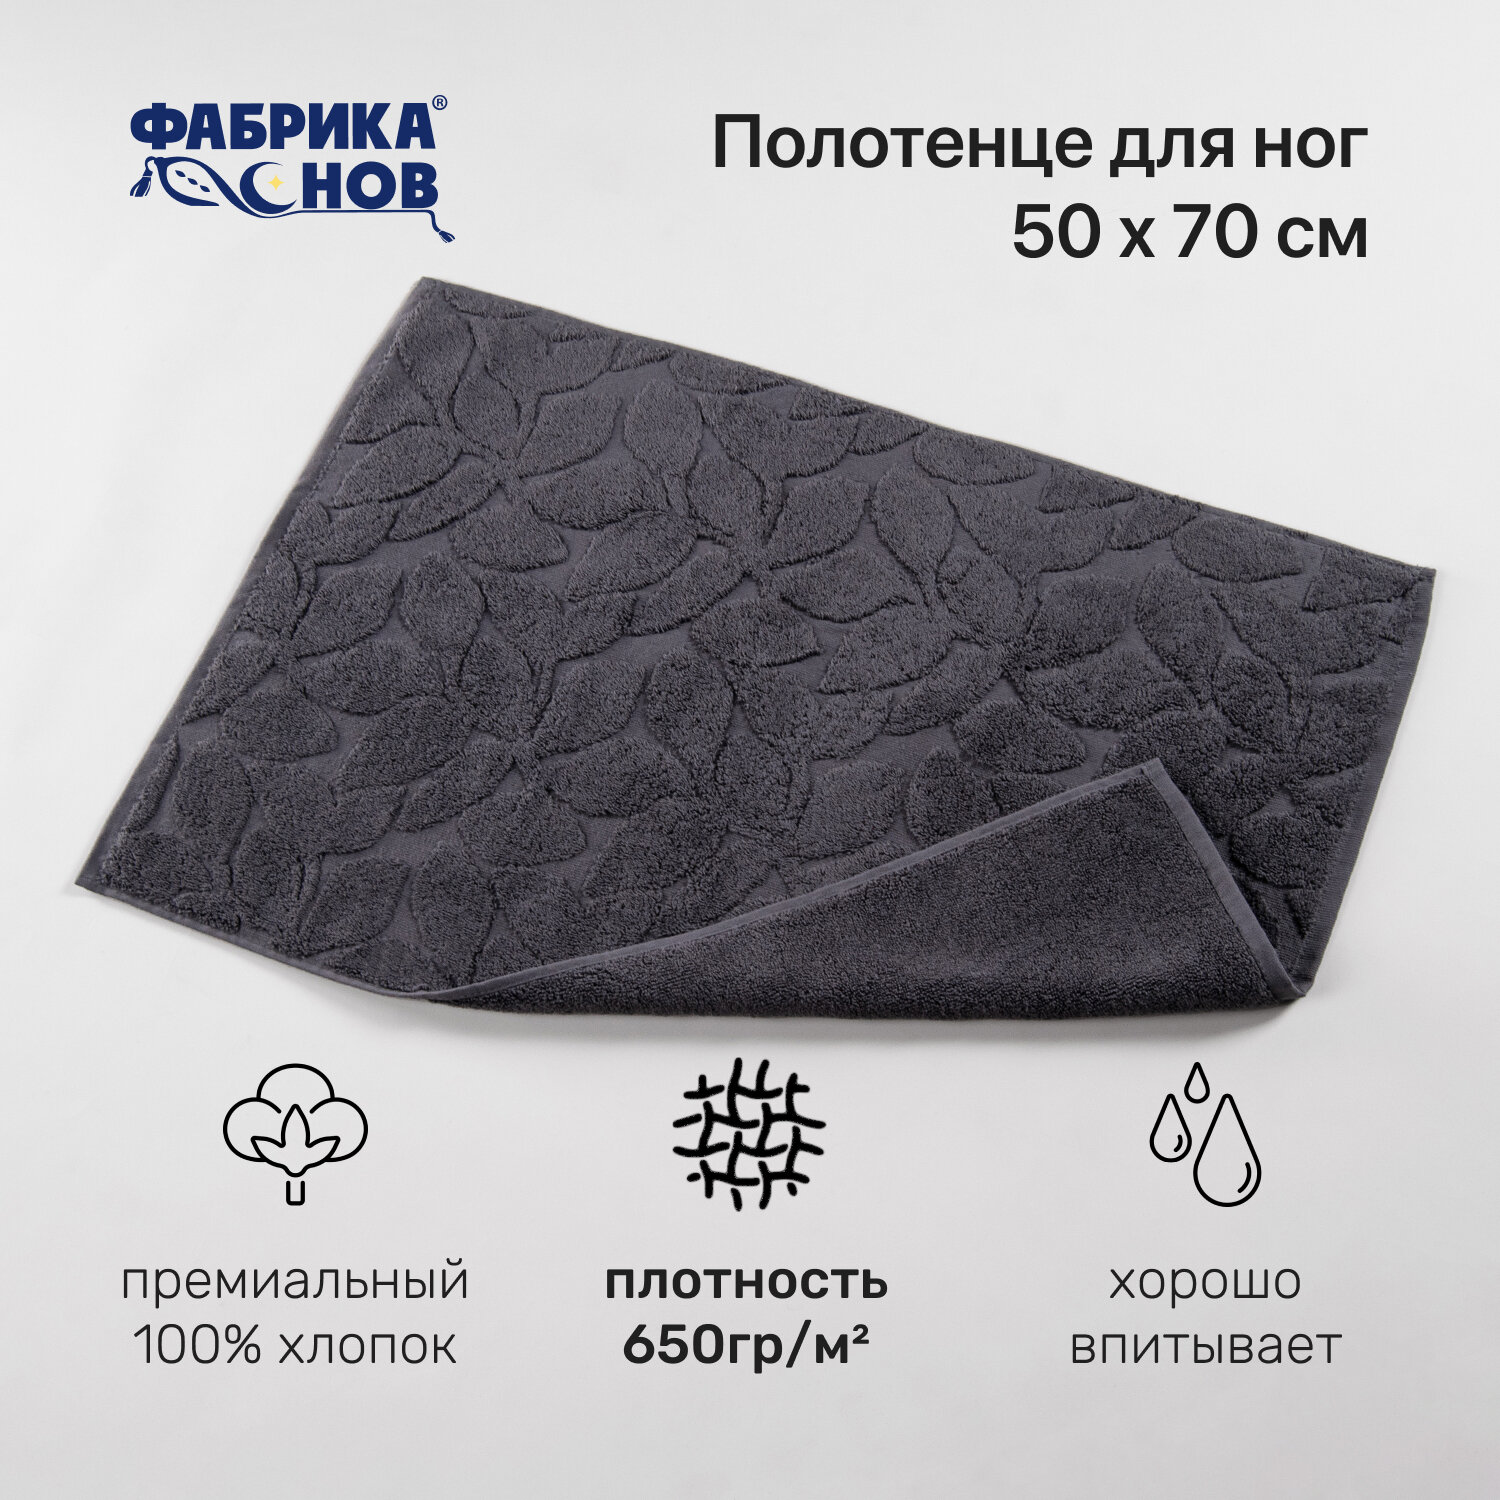 Полотенце-коврик для ног (50х70) 650гр/м2, черный - фотография № 1